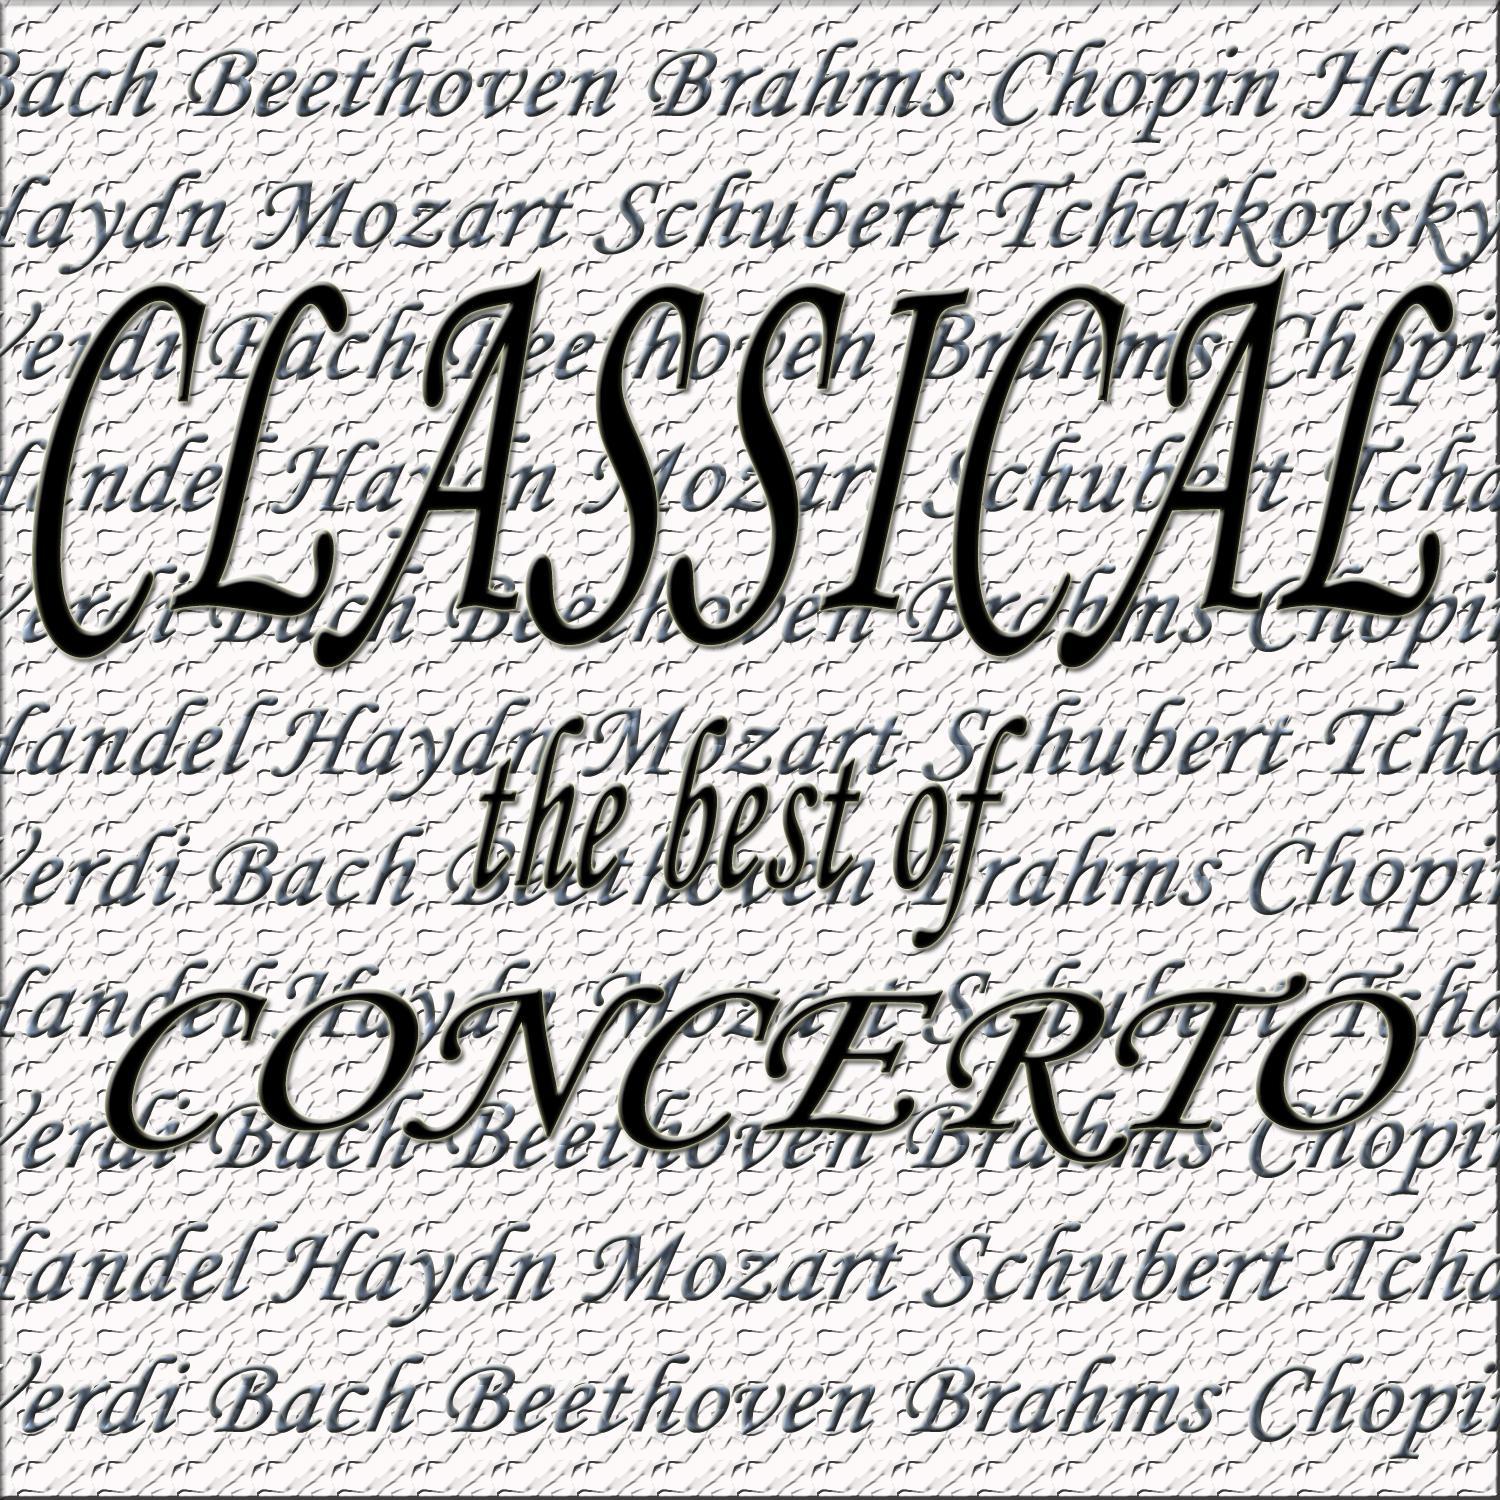 Johann Sebastian Bach - Brandenburg Concerto No. 2 in F Major  BWV 1047: III. Allegro Assai